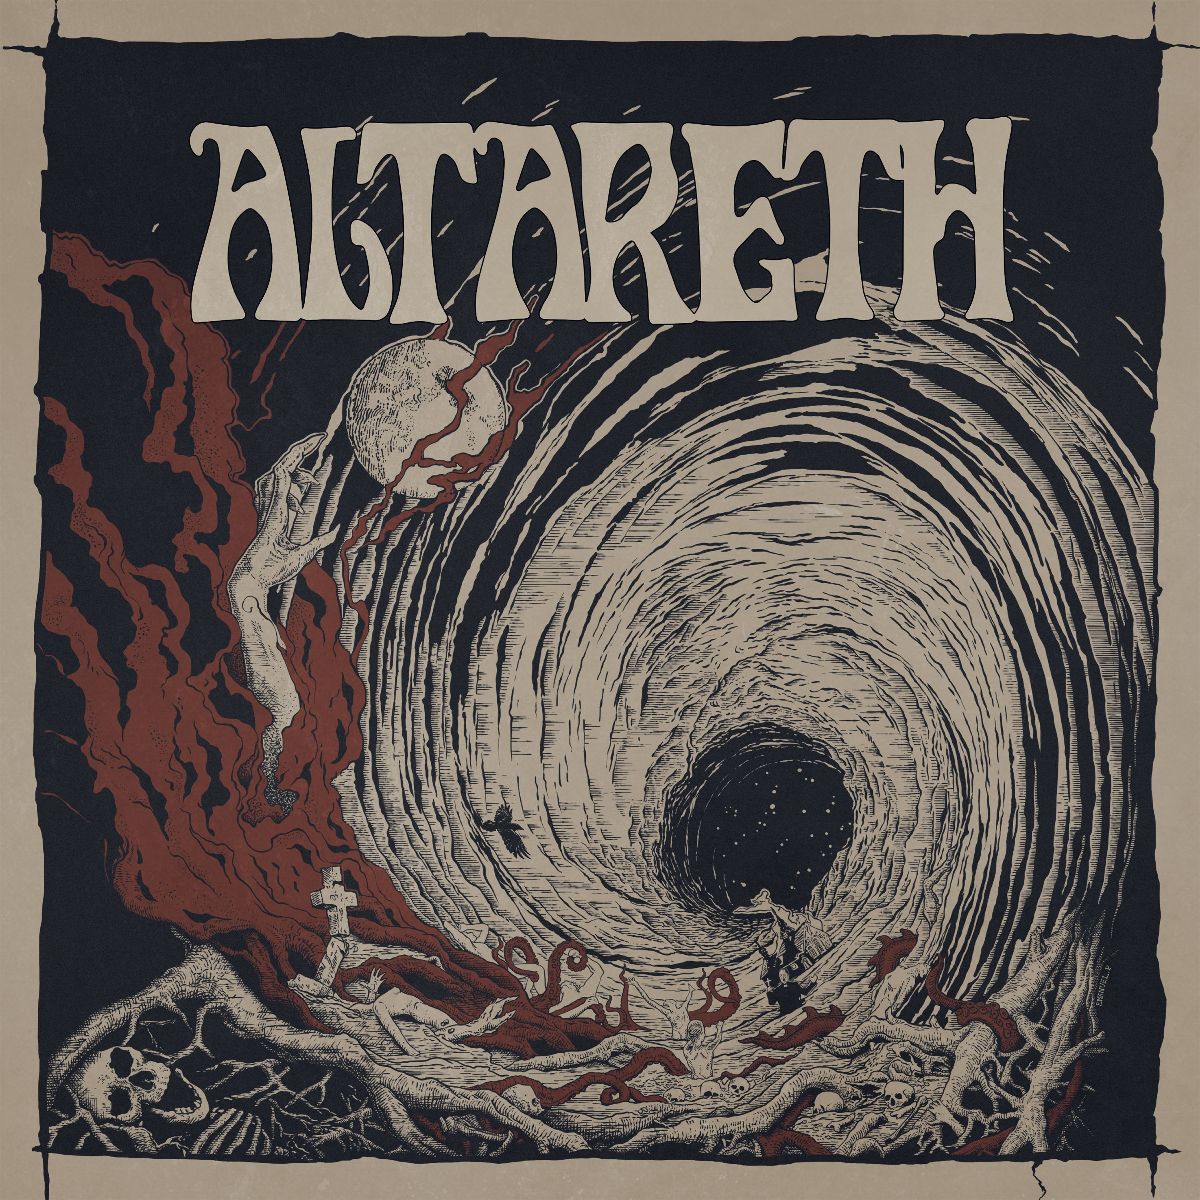 ALTARETH cover art "Blood"